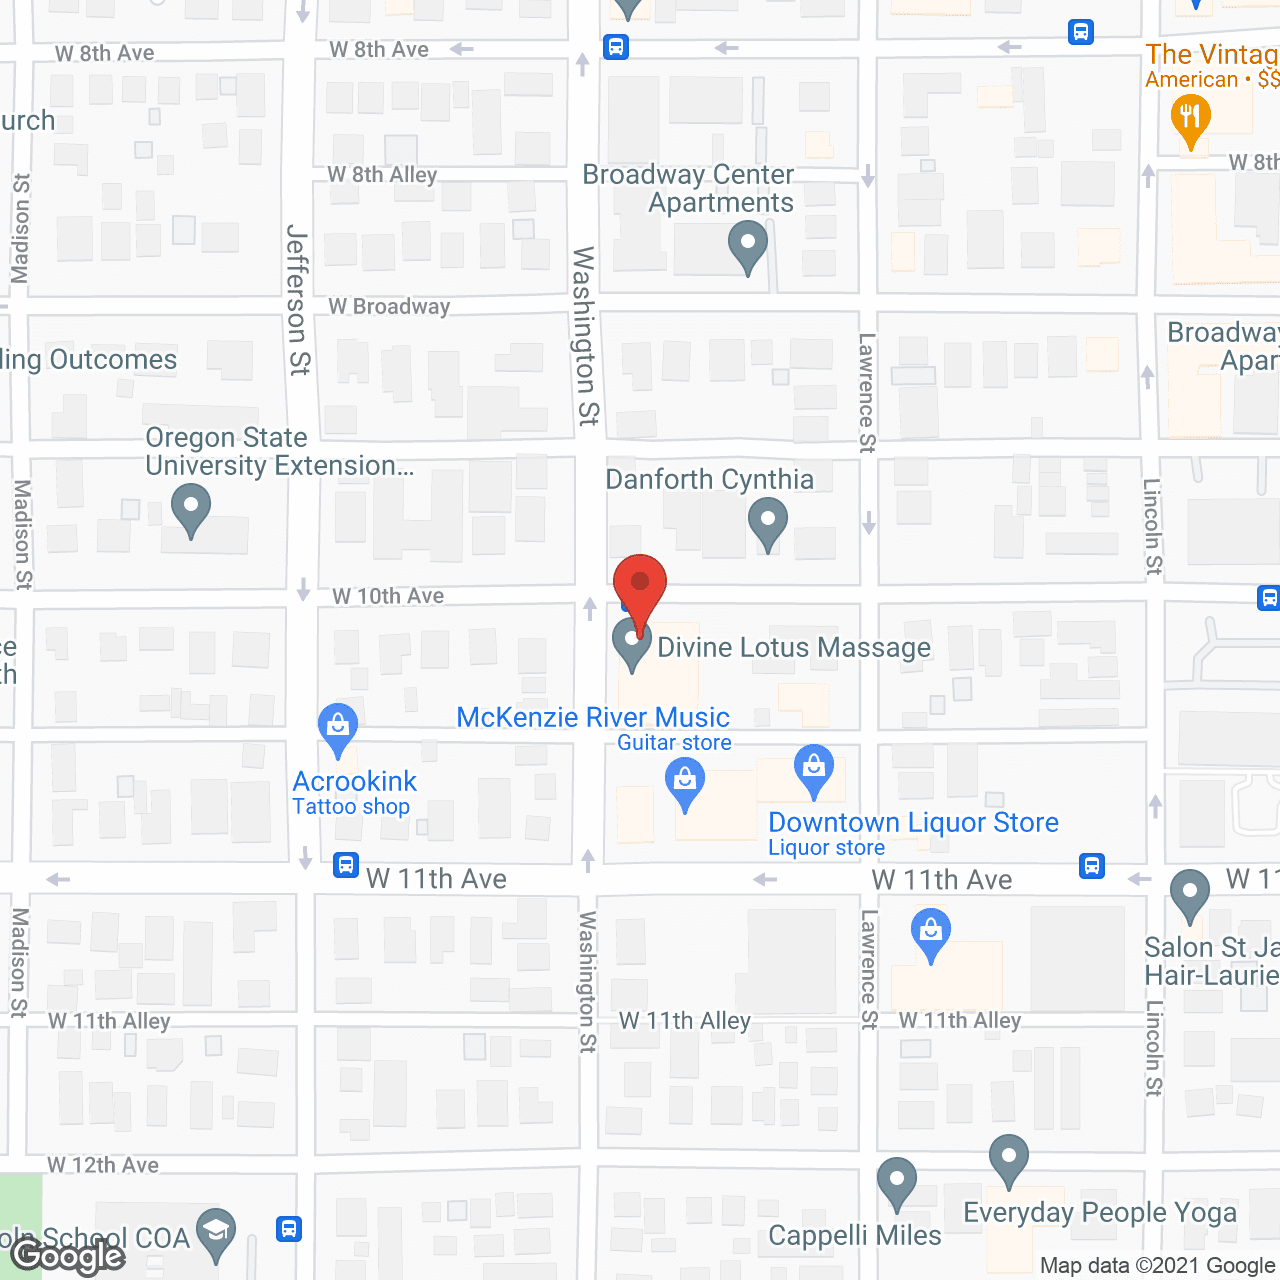 Eugene Abbey in google map